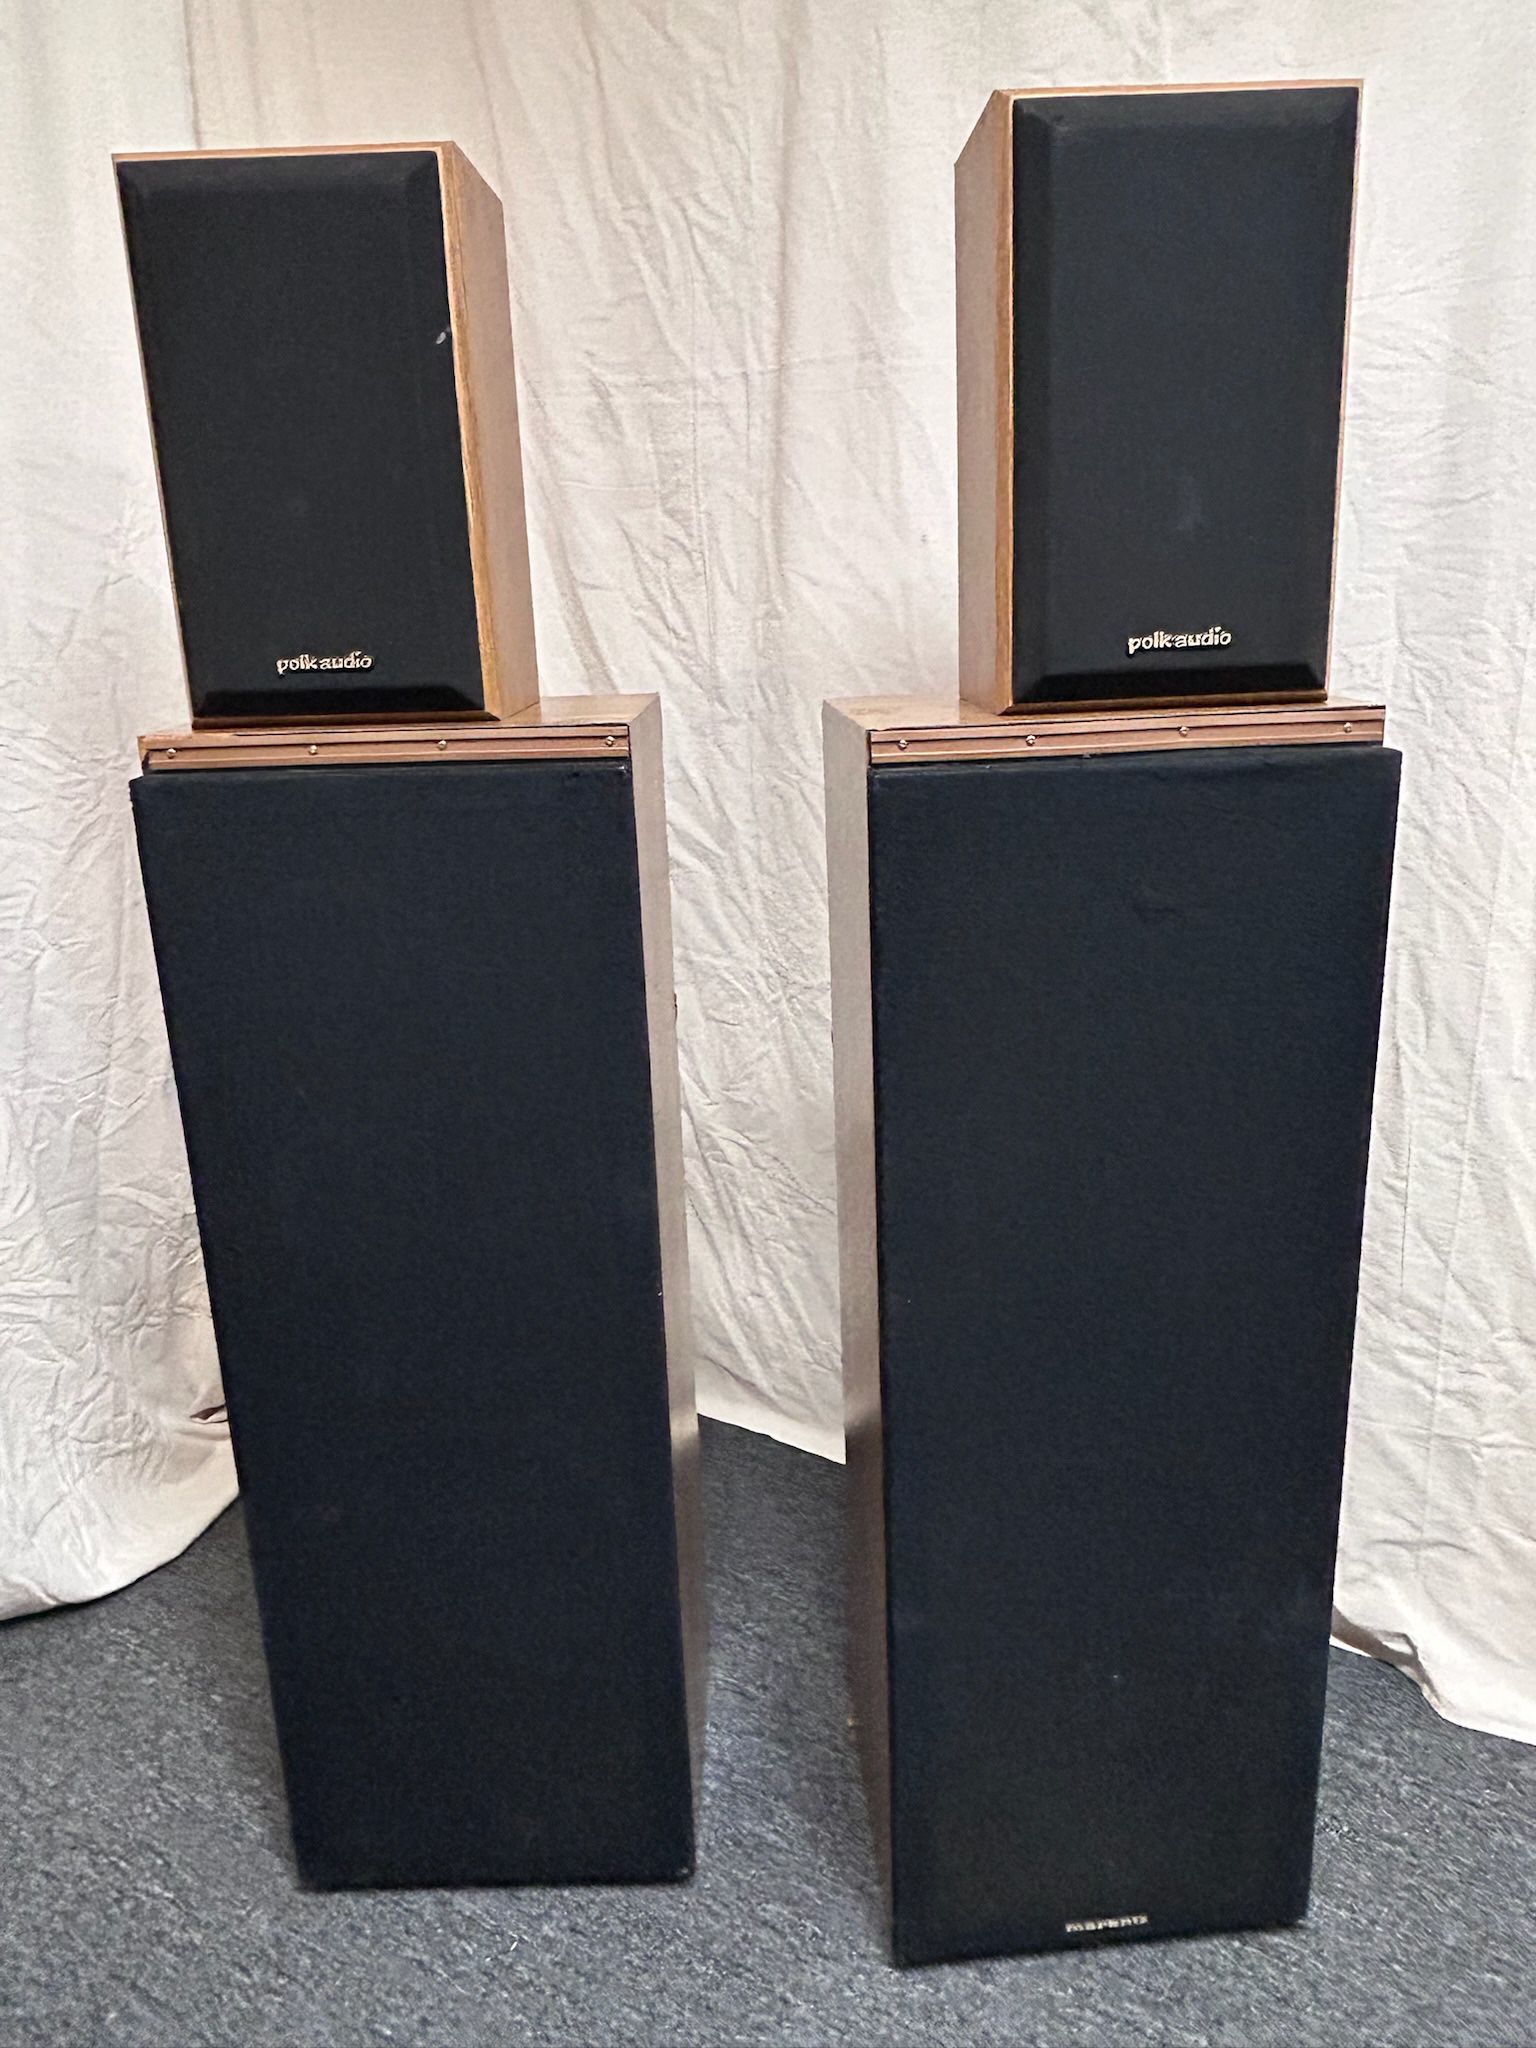 Polk Audio Speakers & Marantz Tower Speakers